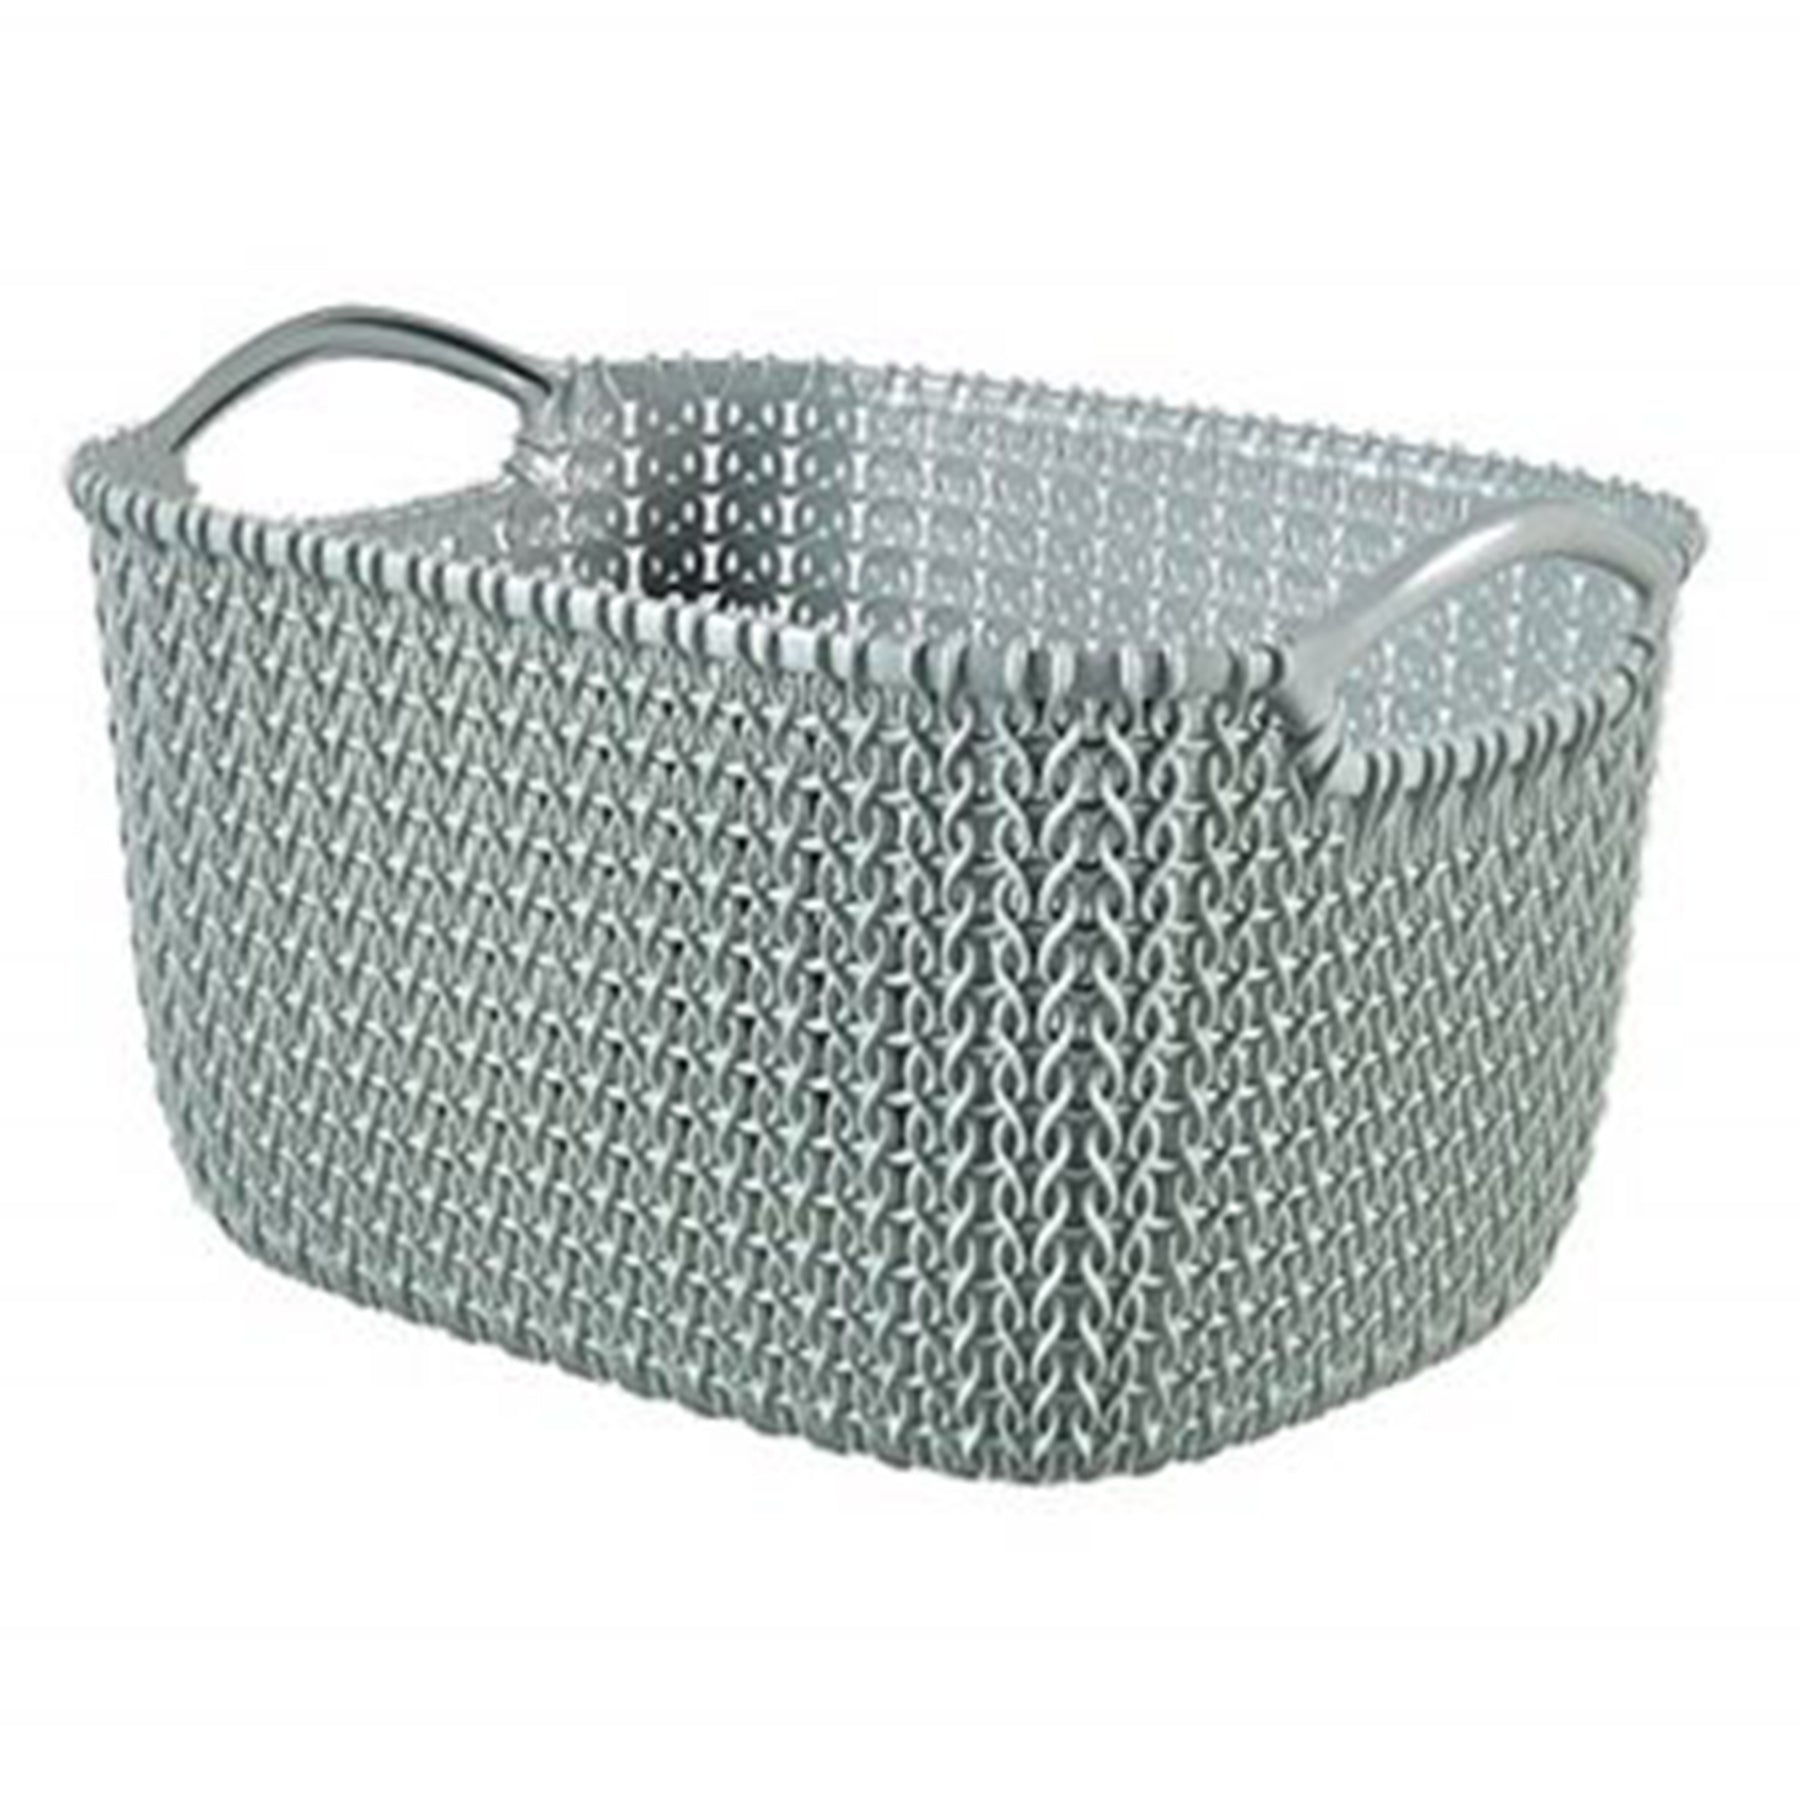 Knit rectangular basket - Blue